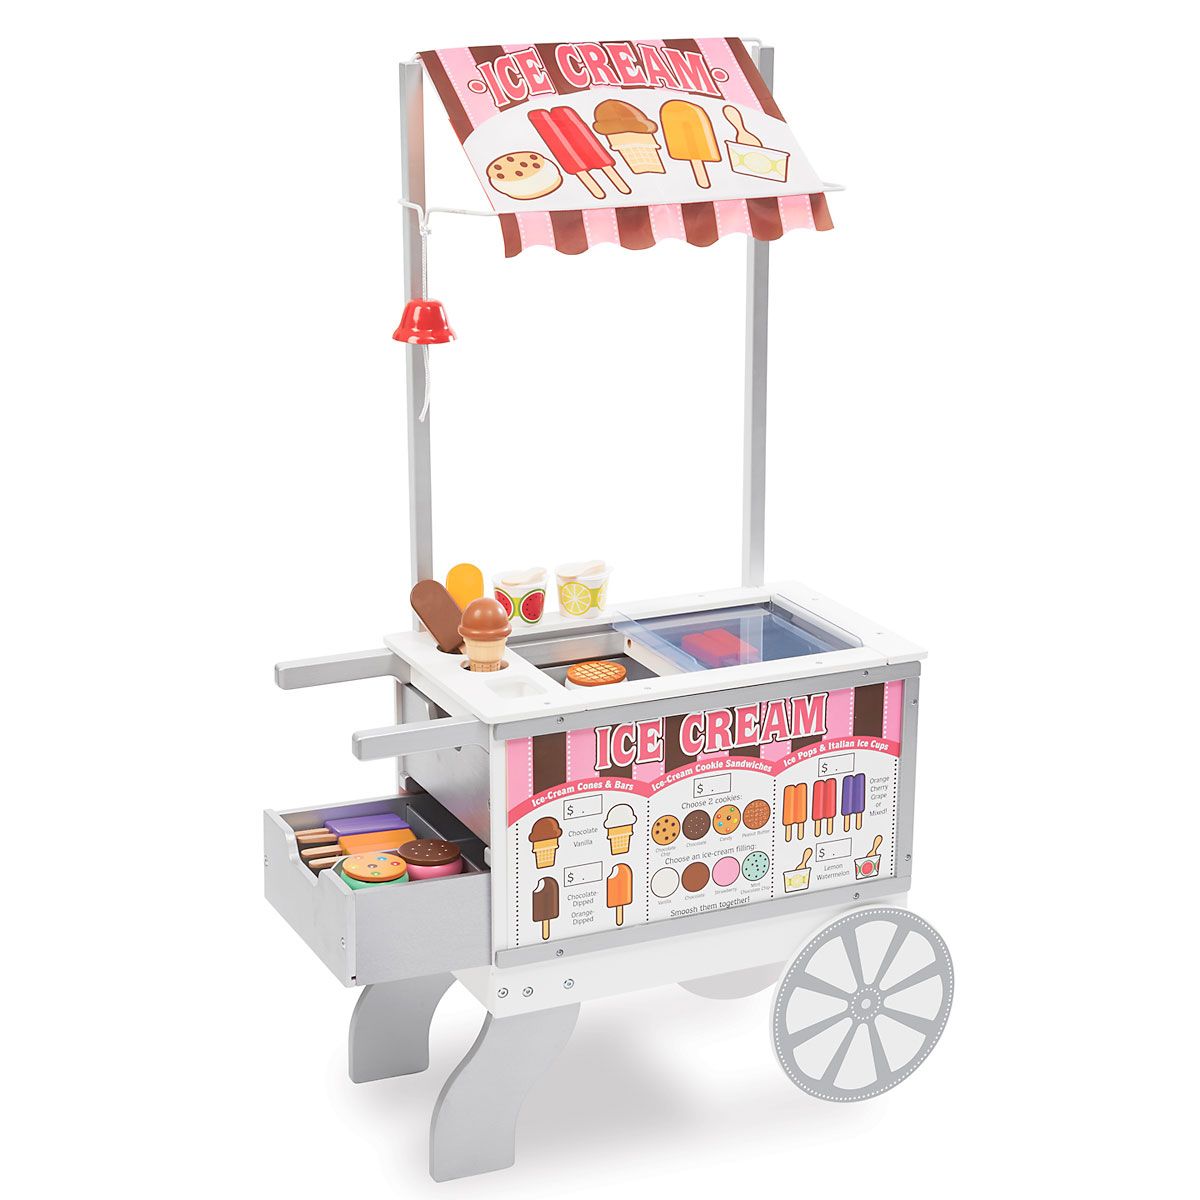 melissa & doug hot dog cart